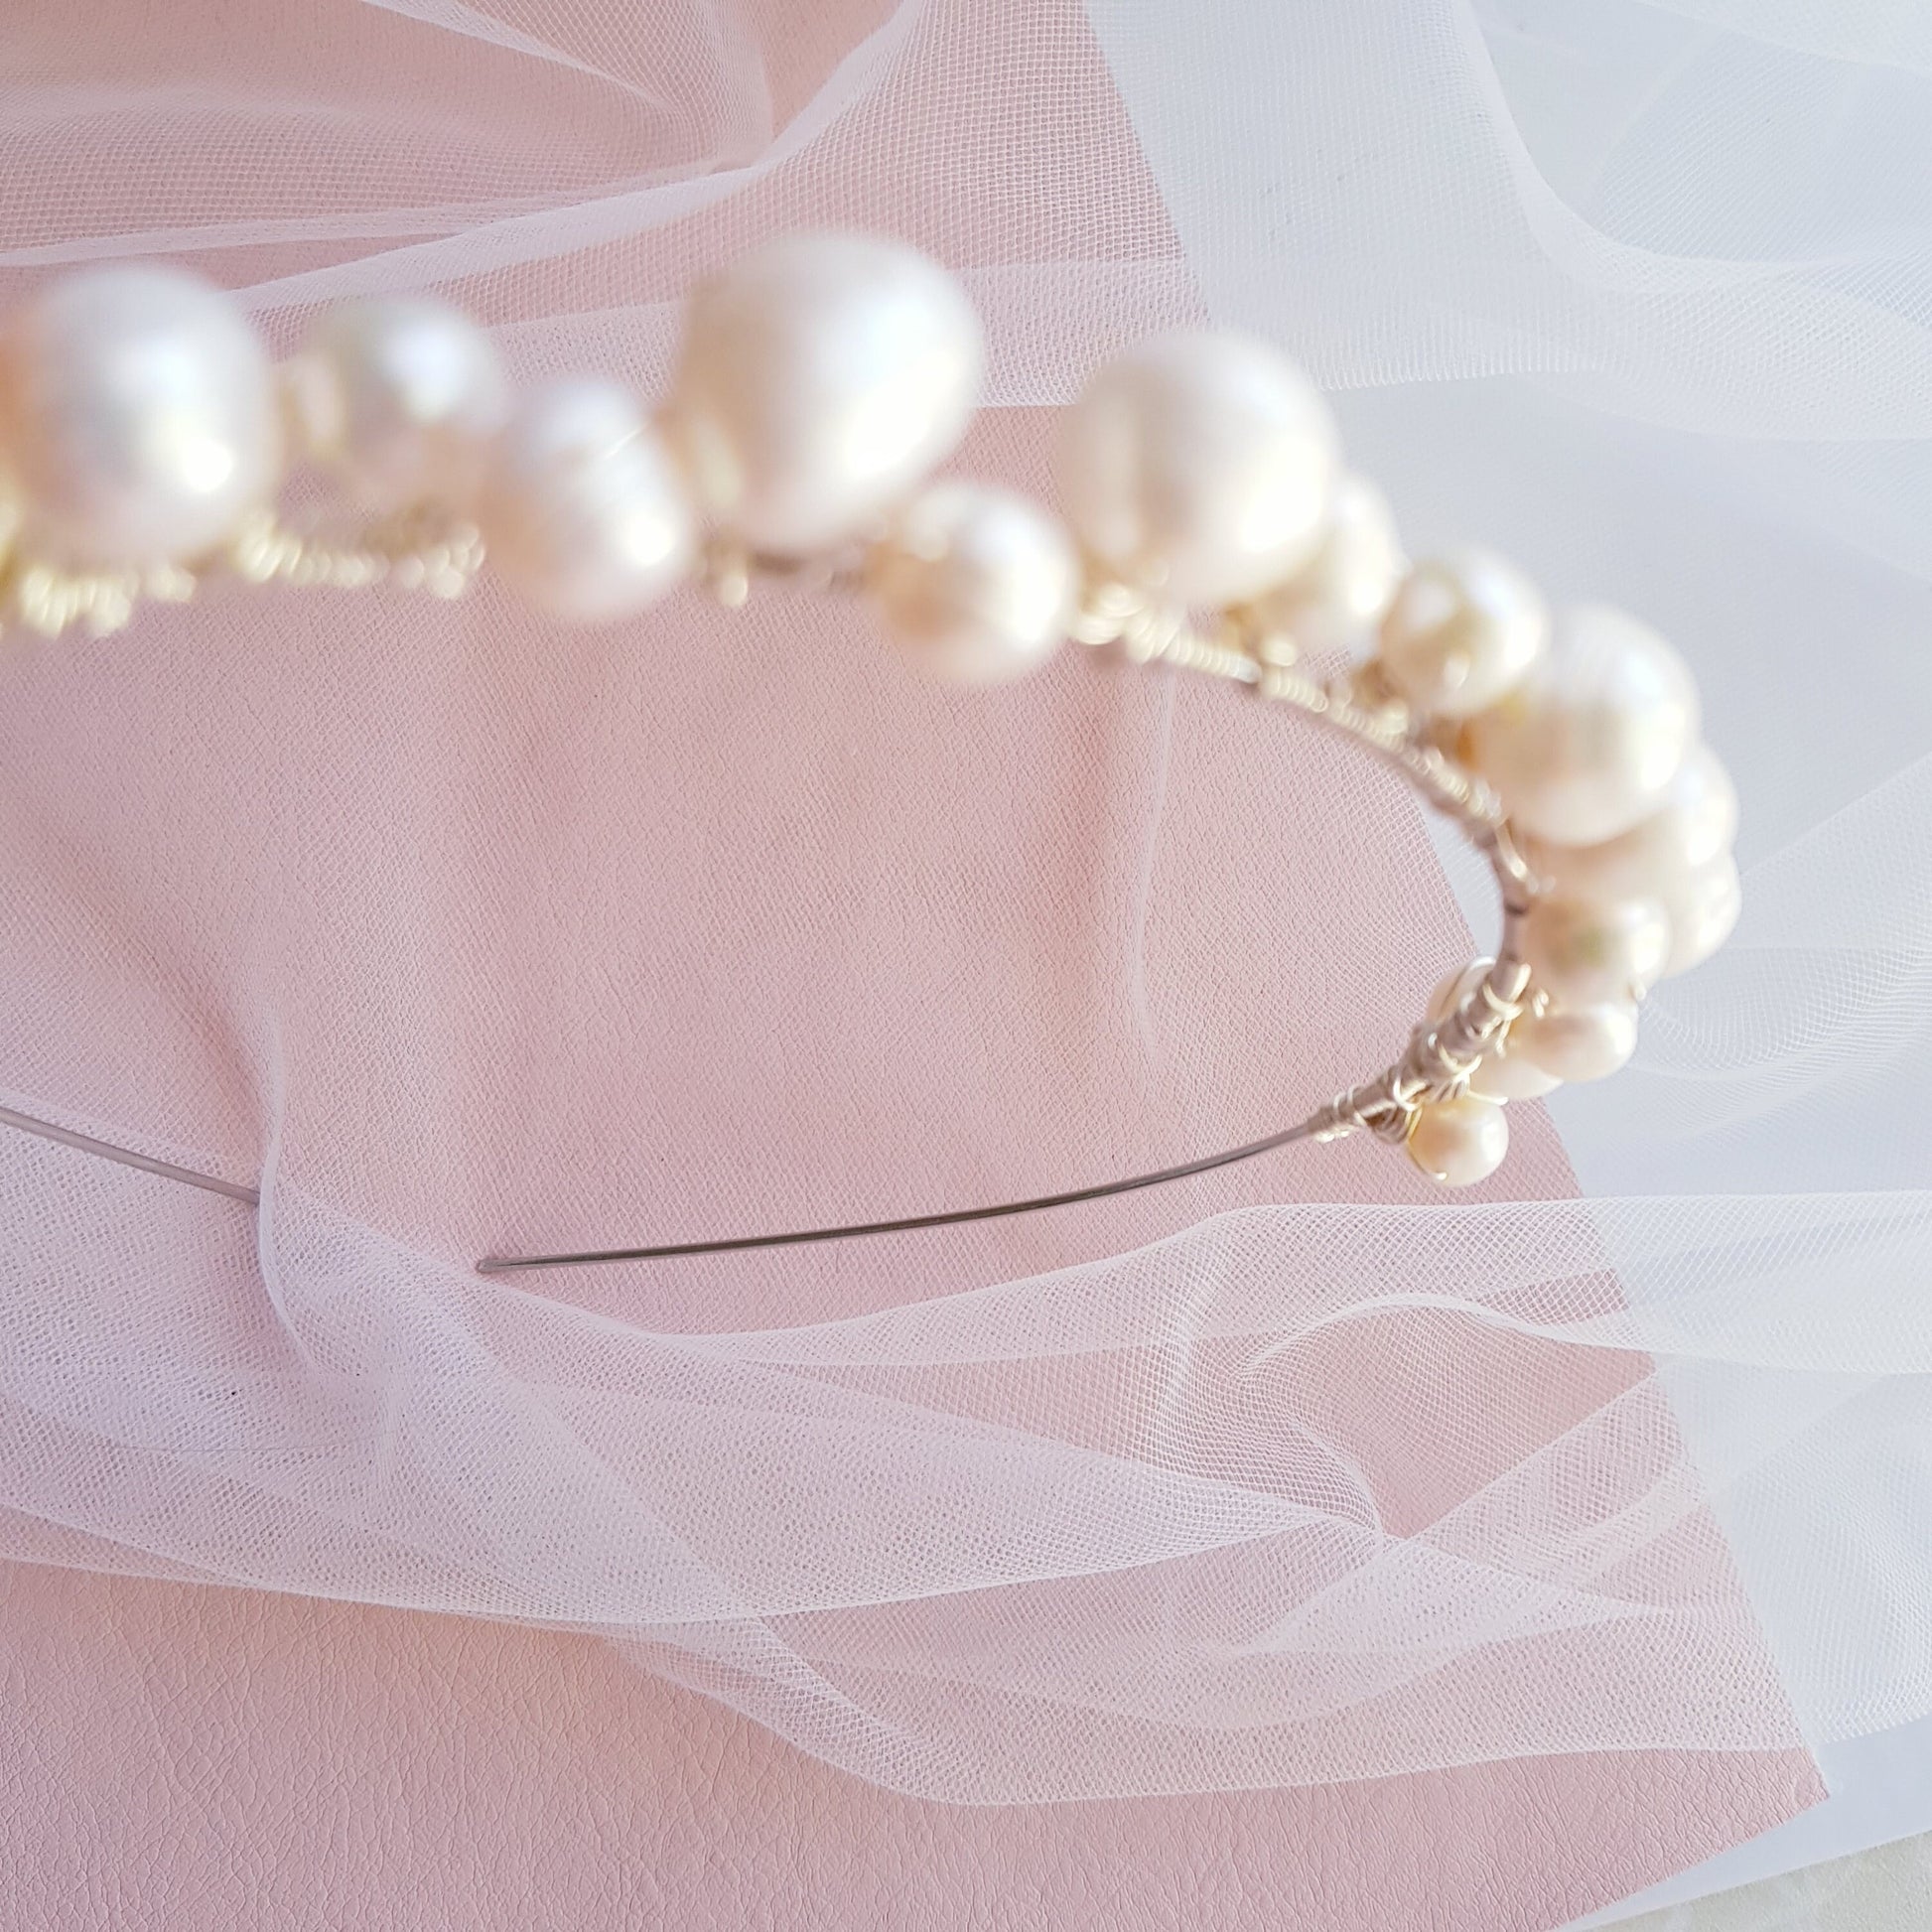 SIMPLICITY SILVER White Cream Pearl Headband Bridal Wedding hairband handmade handcrafted hair accessories Australia Baroque freshwater